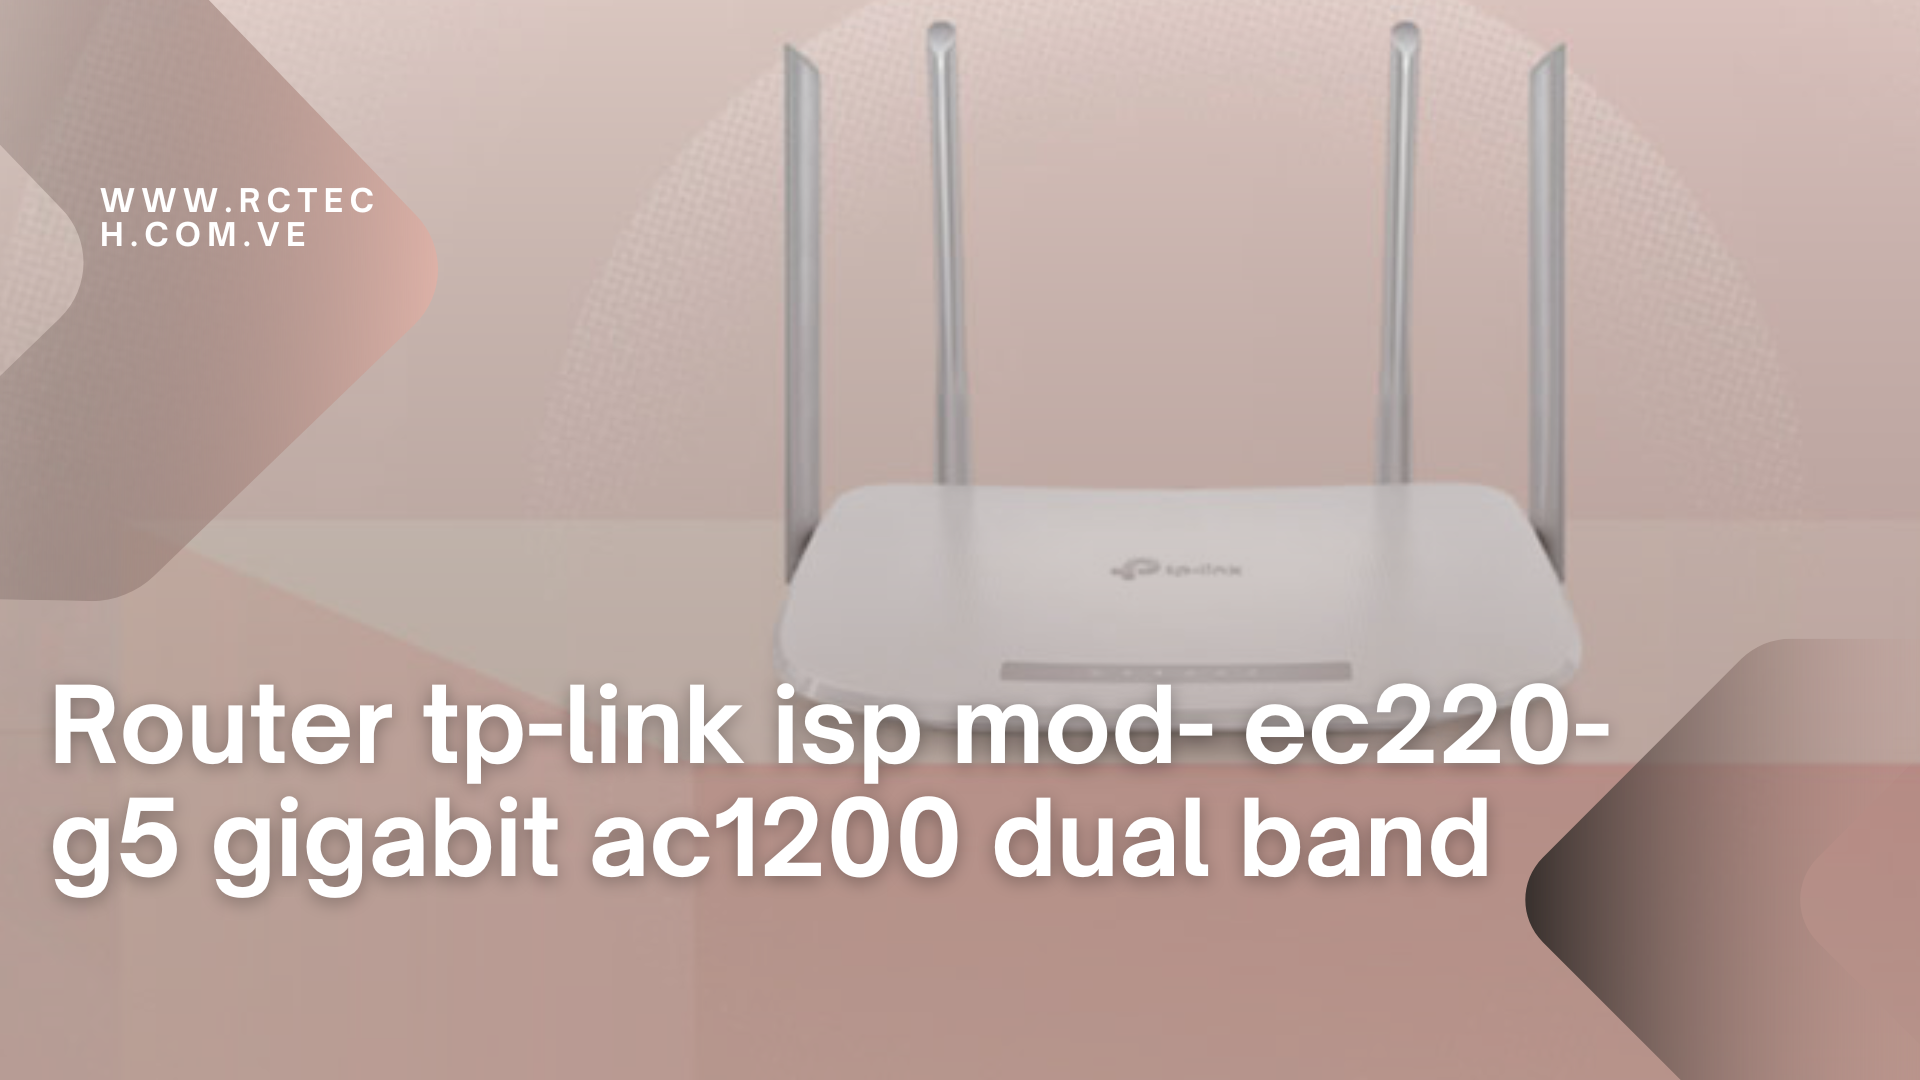 Router TP-LINK ISP MOD- EC220-G5 Gigabit  AC1200 dual band